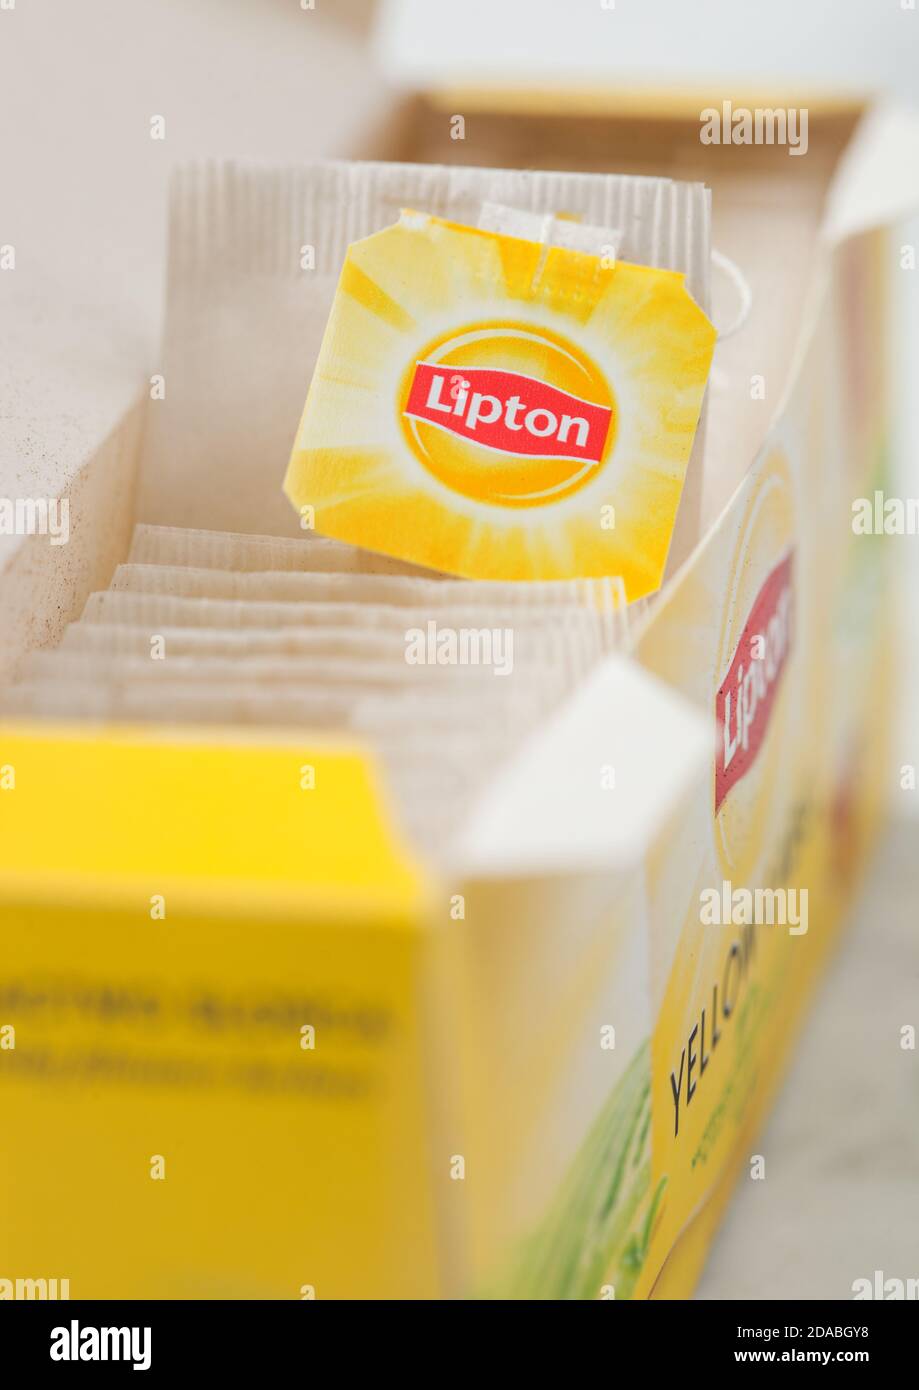 LONDON, UK - OCTOBER 21, 2020: Pack of Lipton Yellow Label tea bags of  flavoured black tea on light background Stock Photo - Alamy